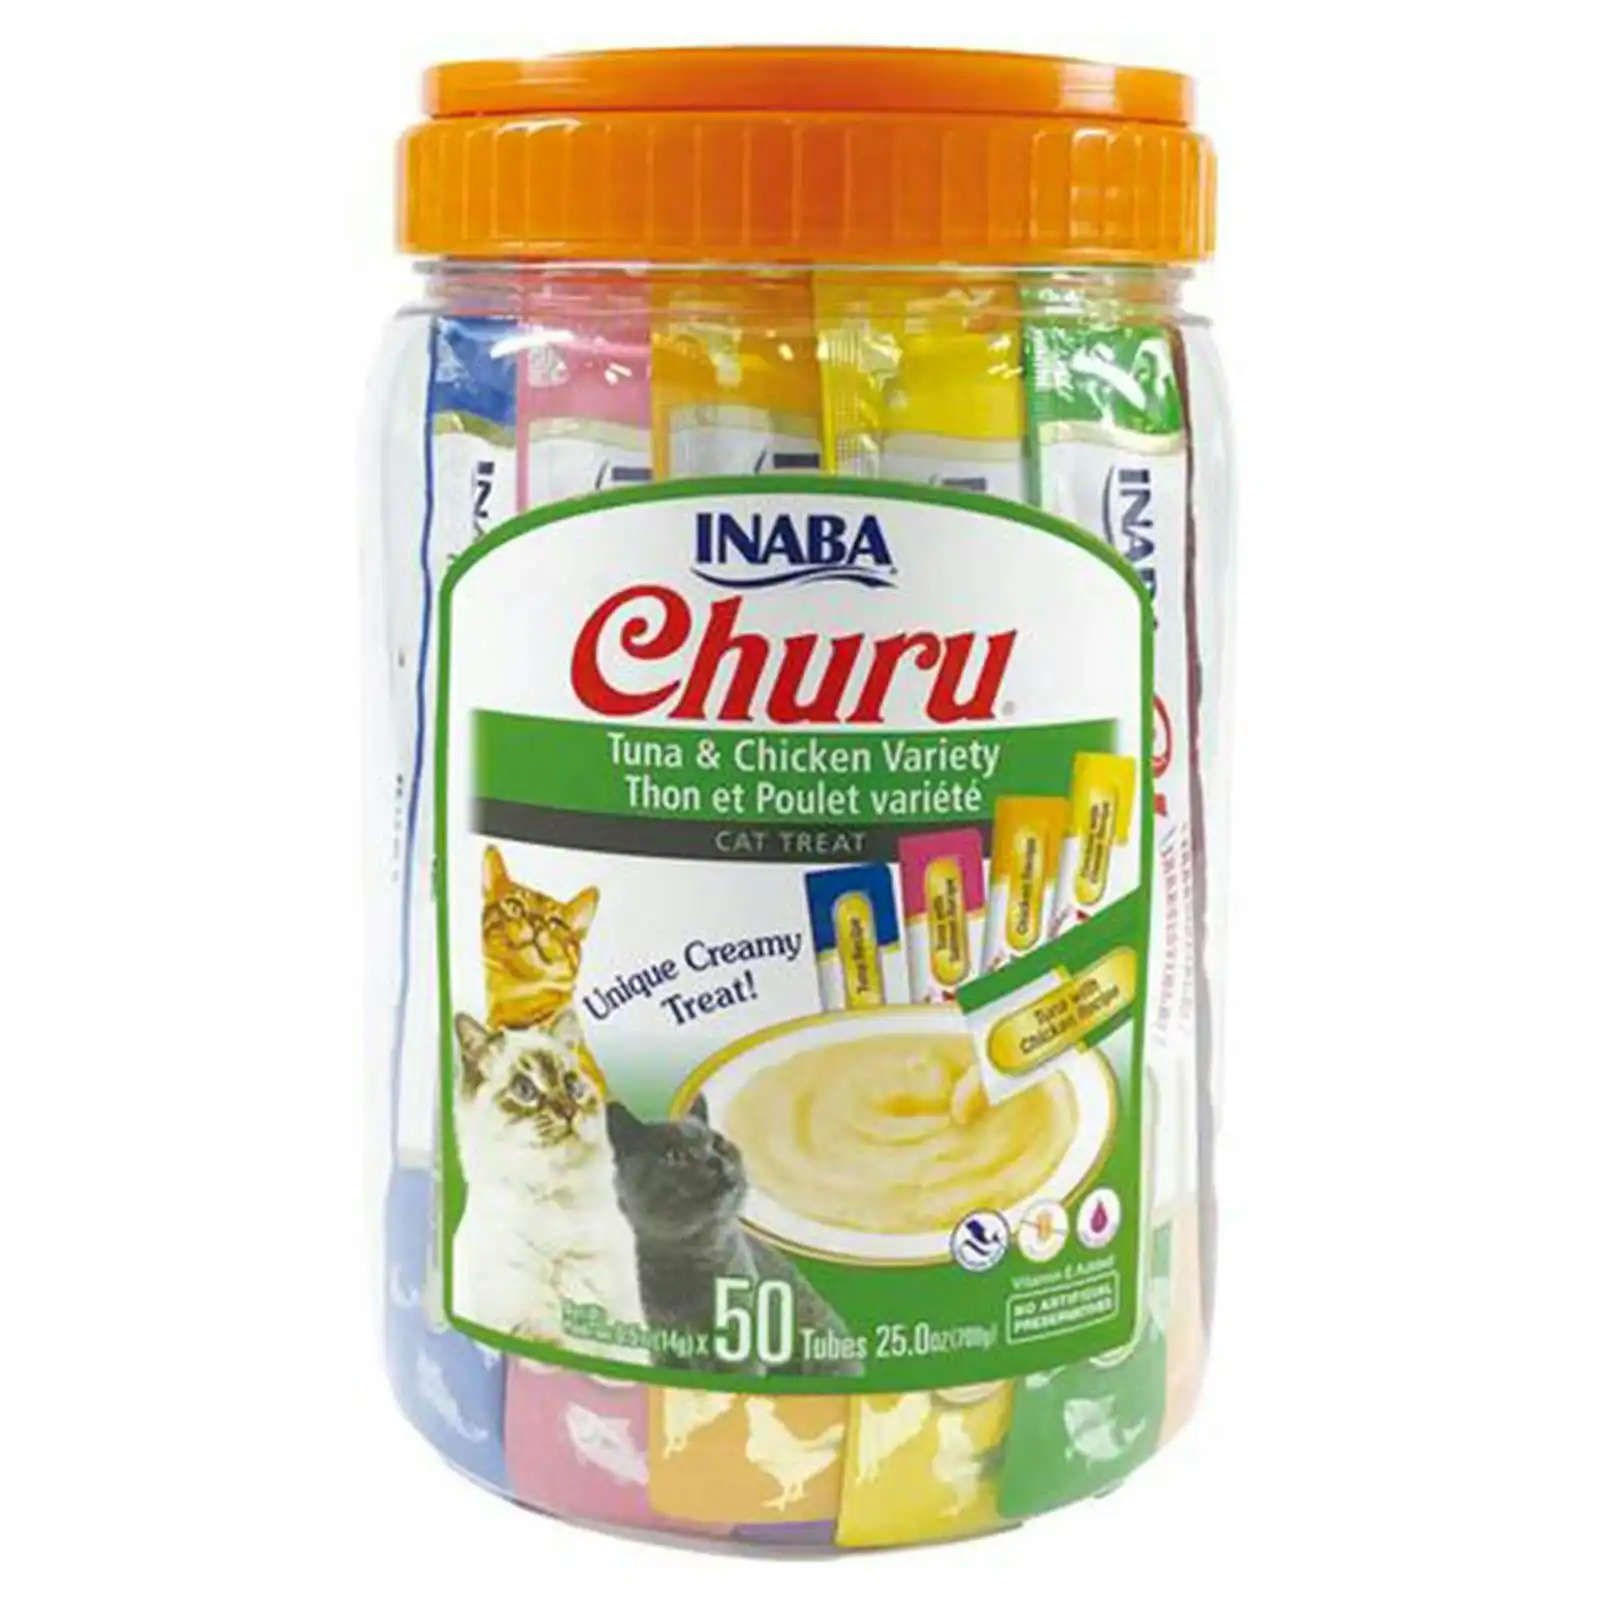 Inaba Churu Creamy Puree Tuna And Chicken Varieties Tub Cat Treat Tubes 50 Pack 700gm